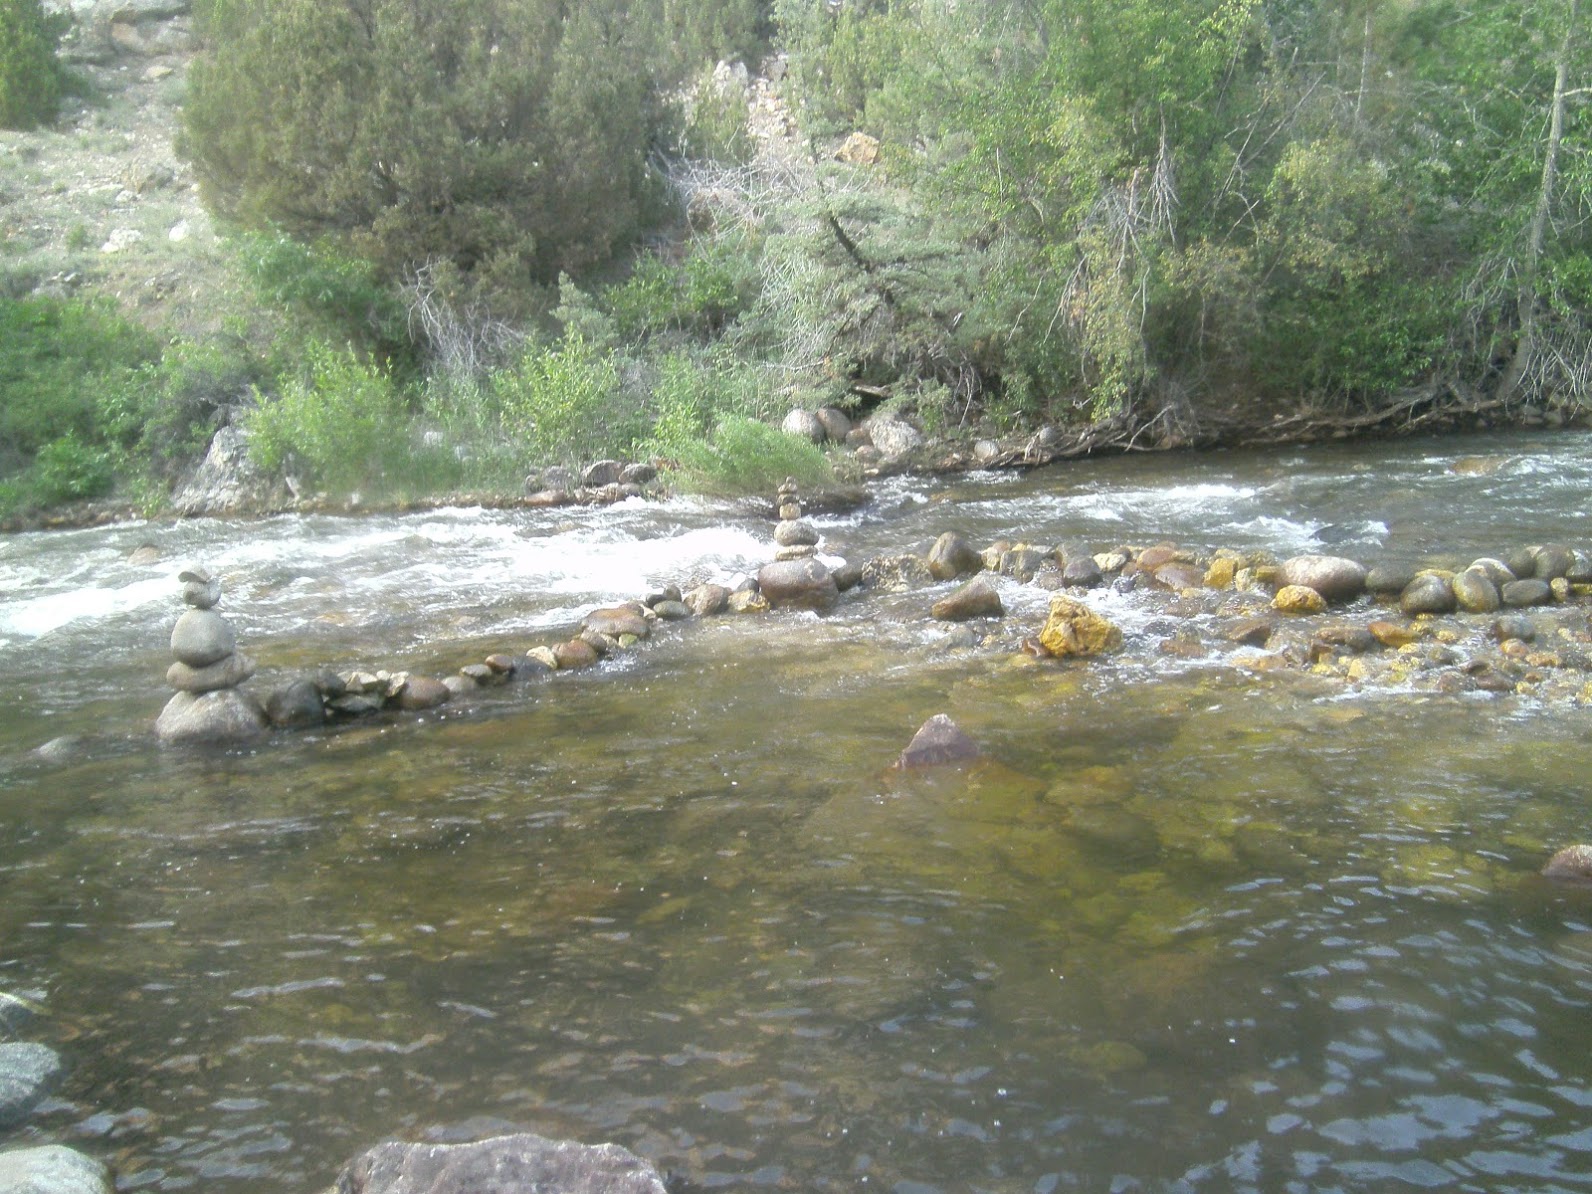 Nearby stream